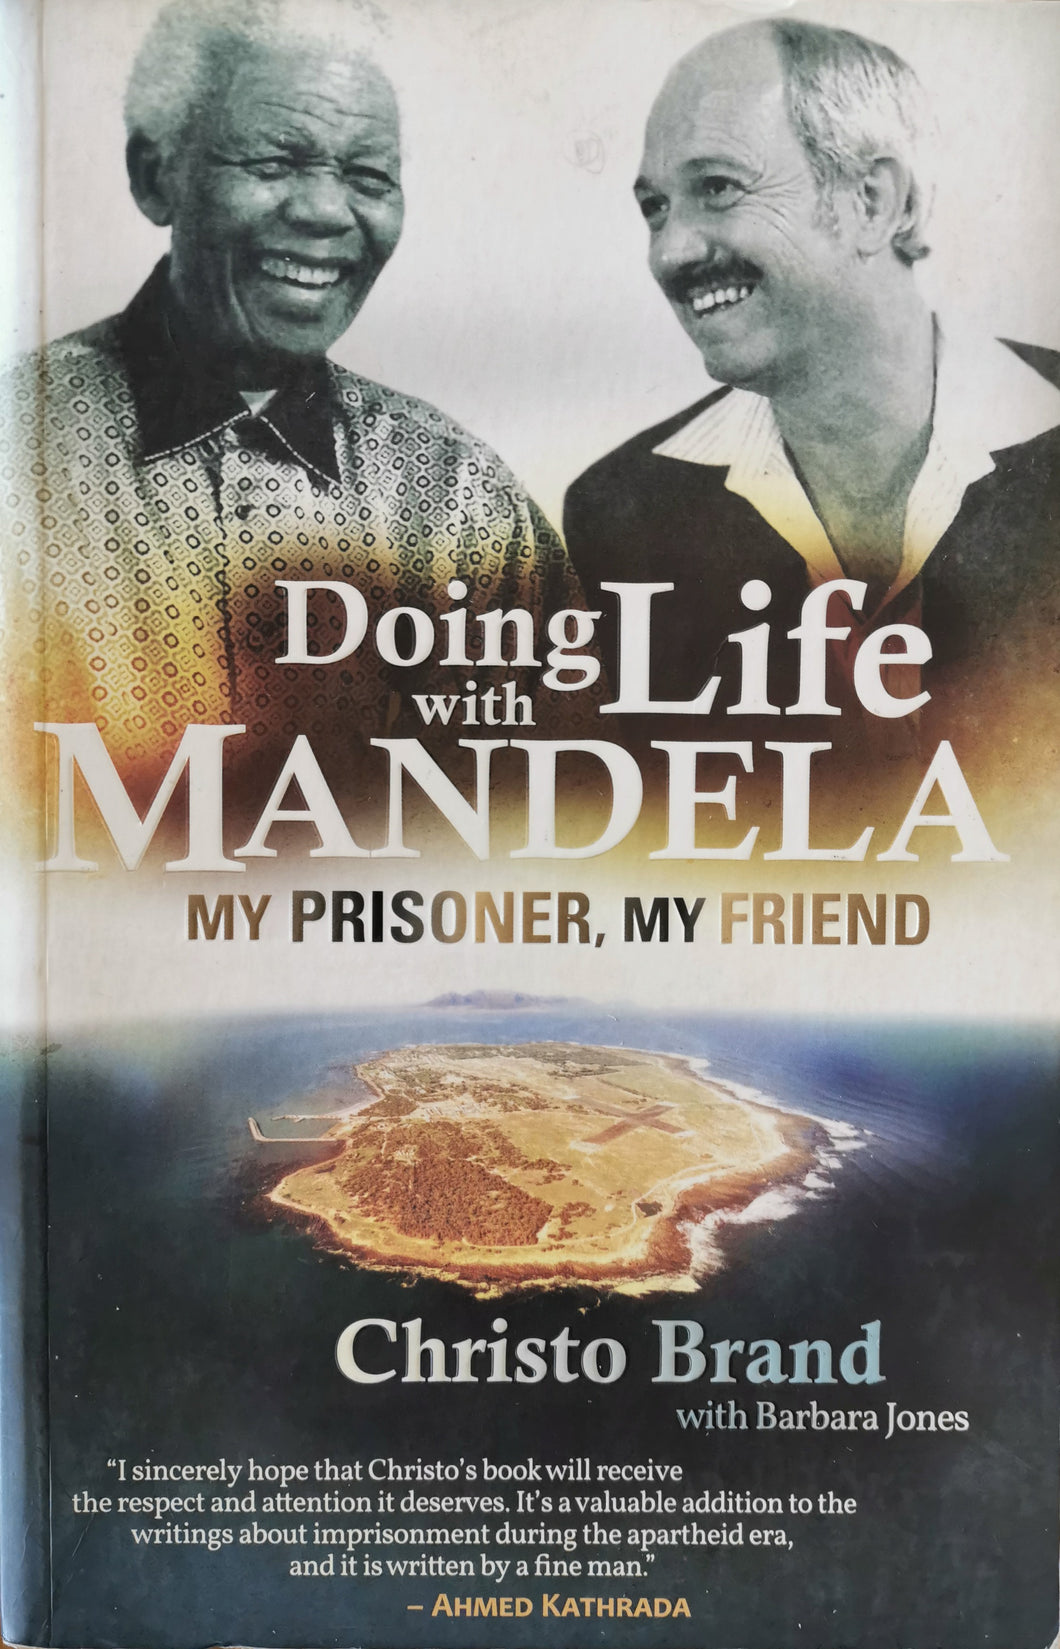 Doing Life with Mandela: My Prisoner, My Friend by Christo Brand